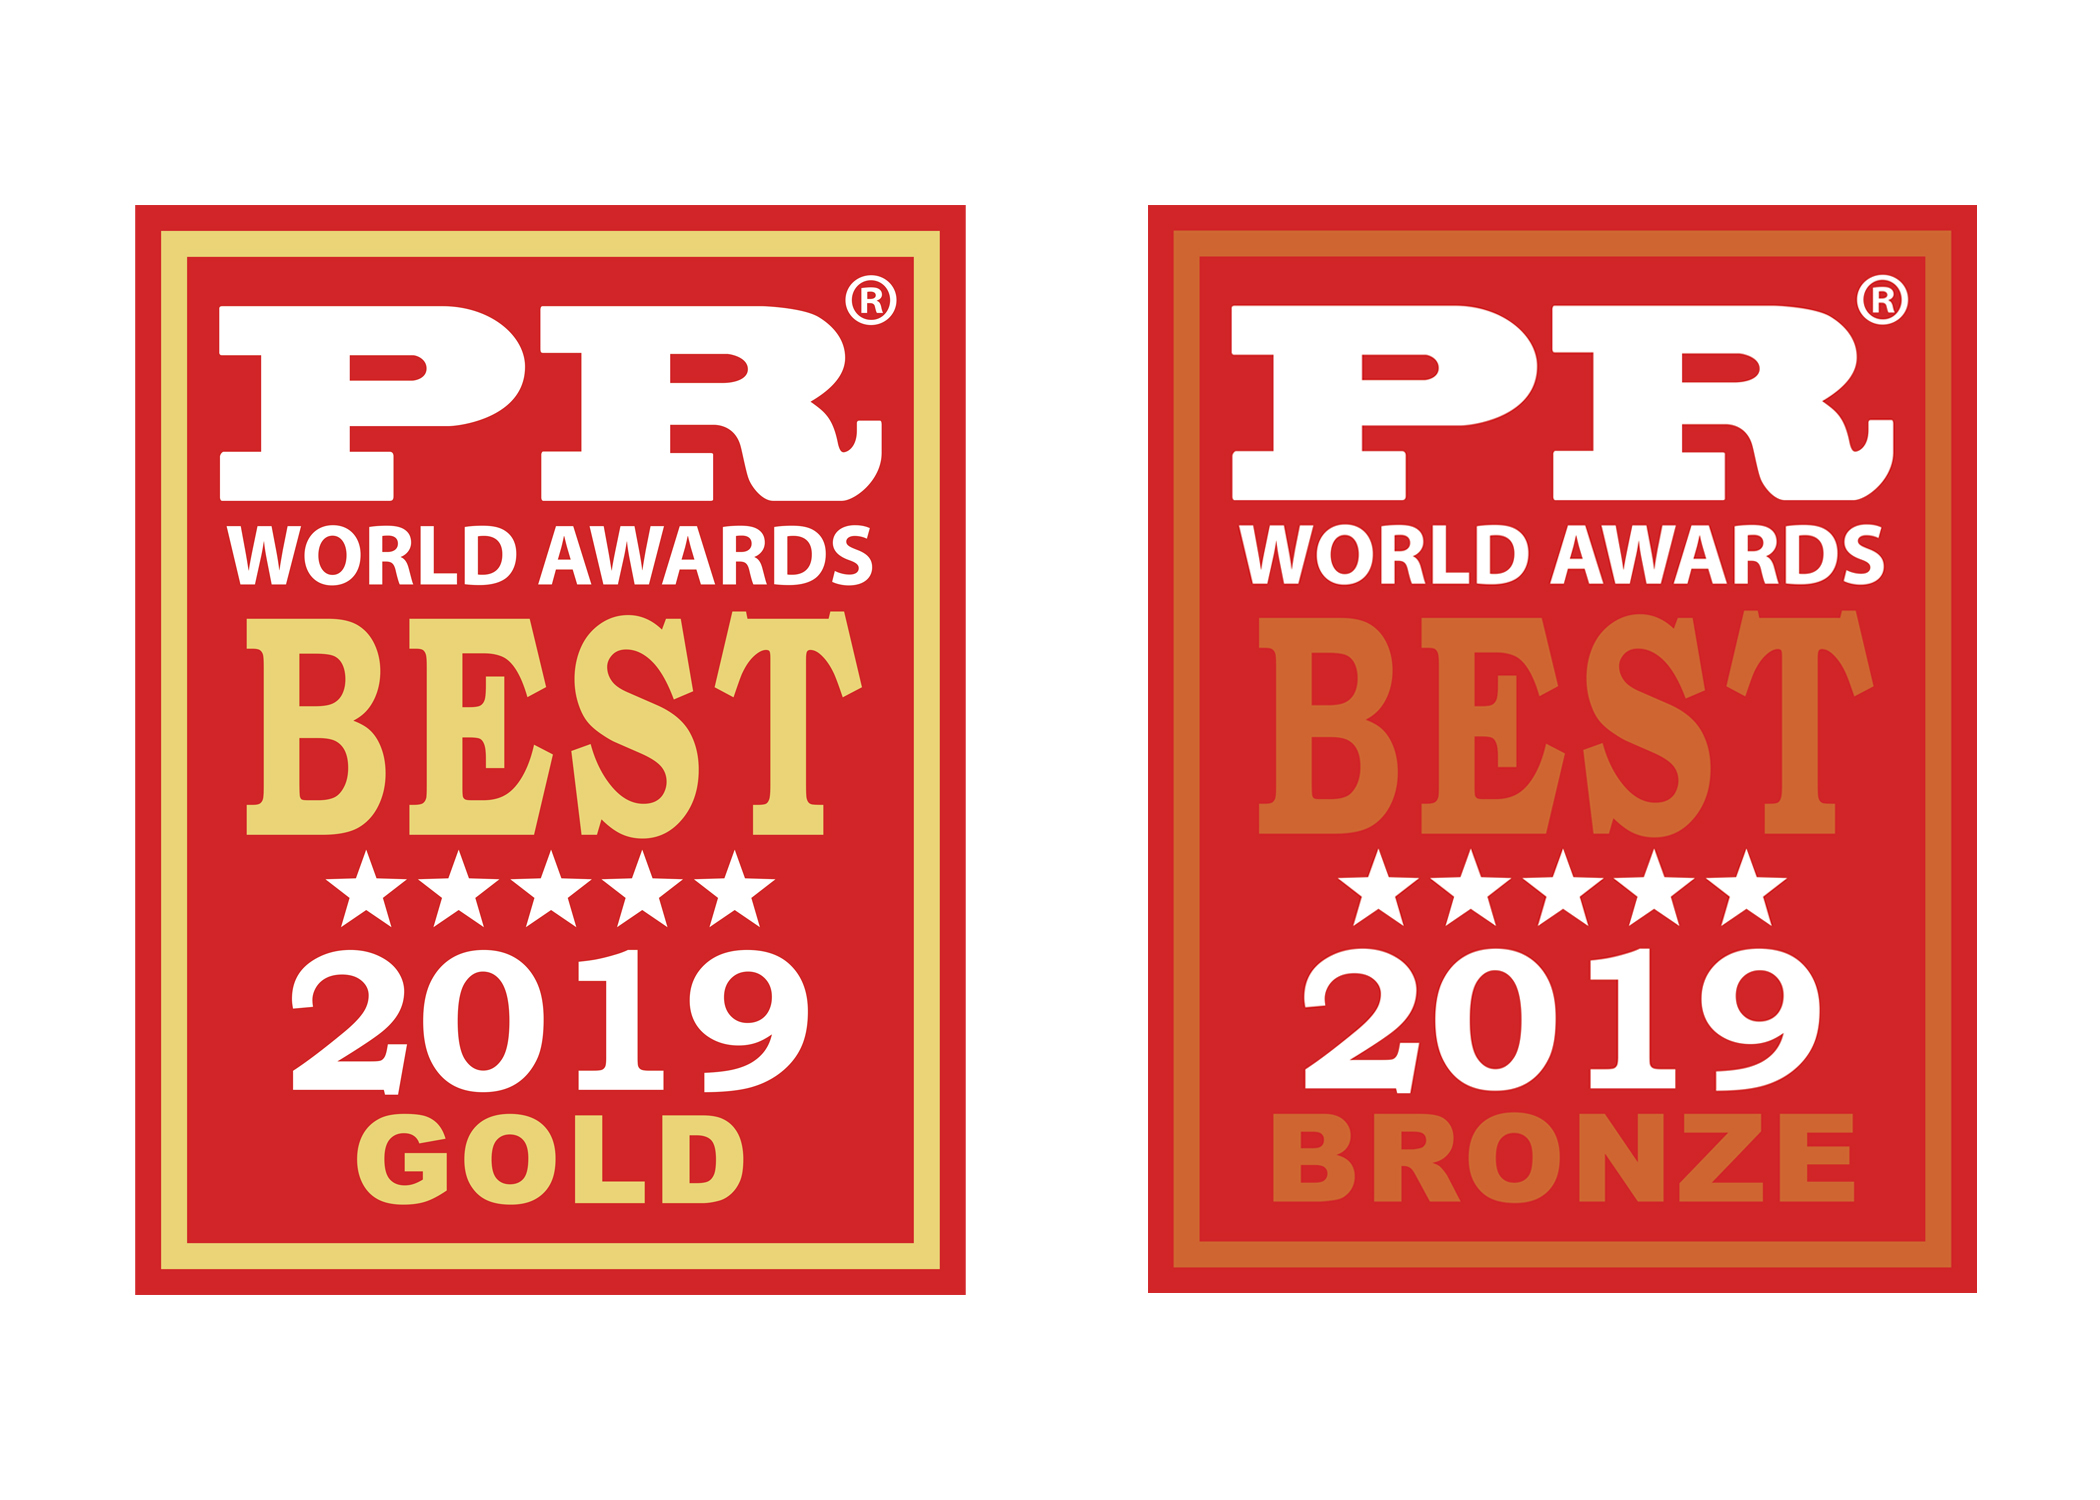 Simplify Workforce announceds that its marketing team has received six prestigious PR World Awards®, including 4 gold awards.